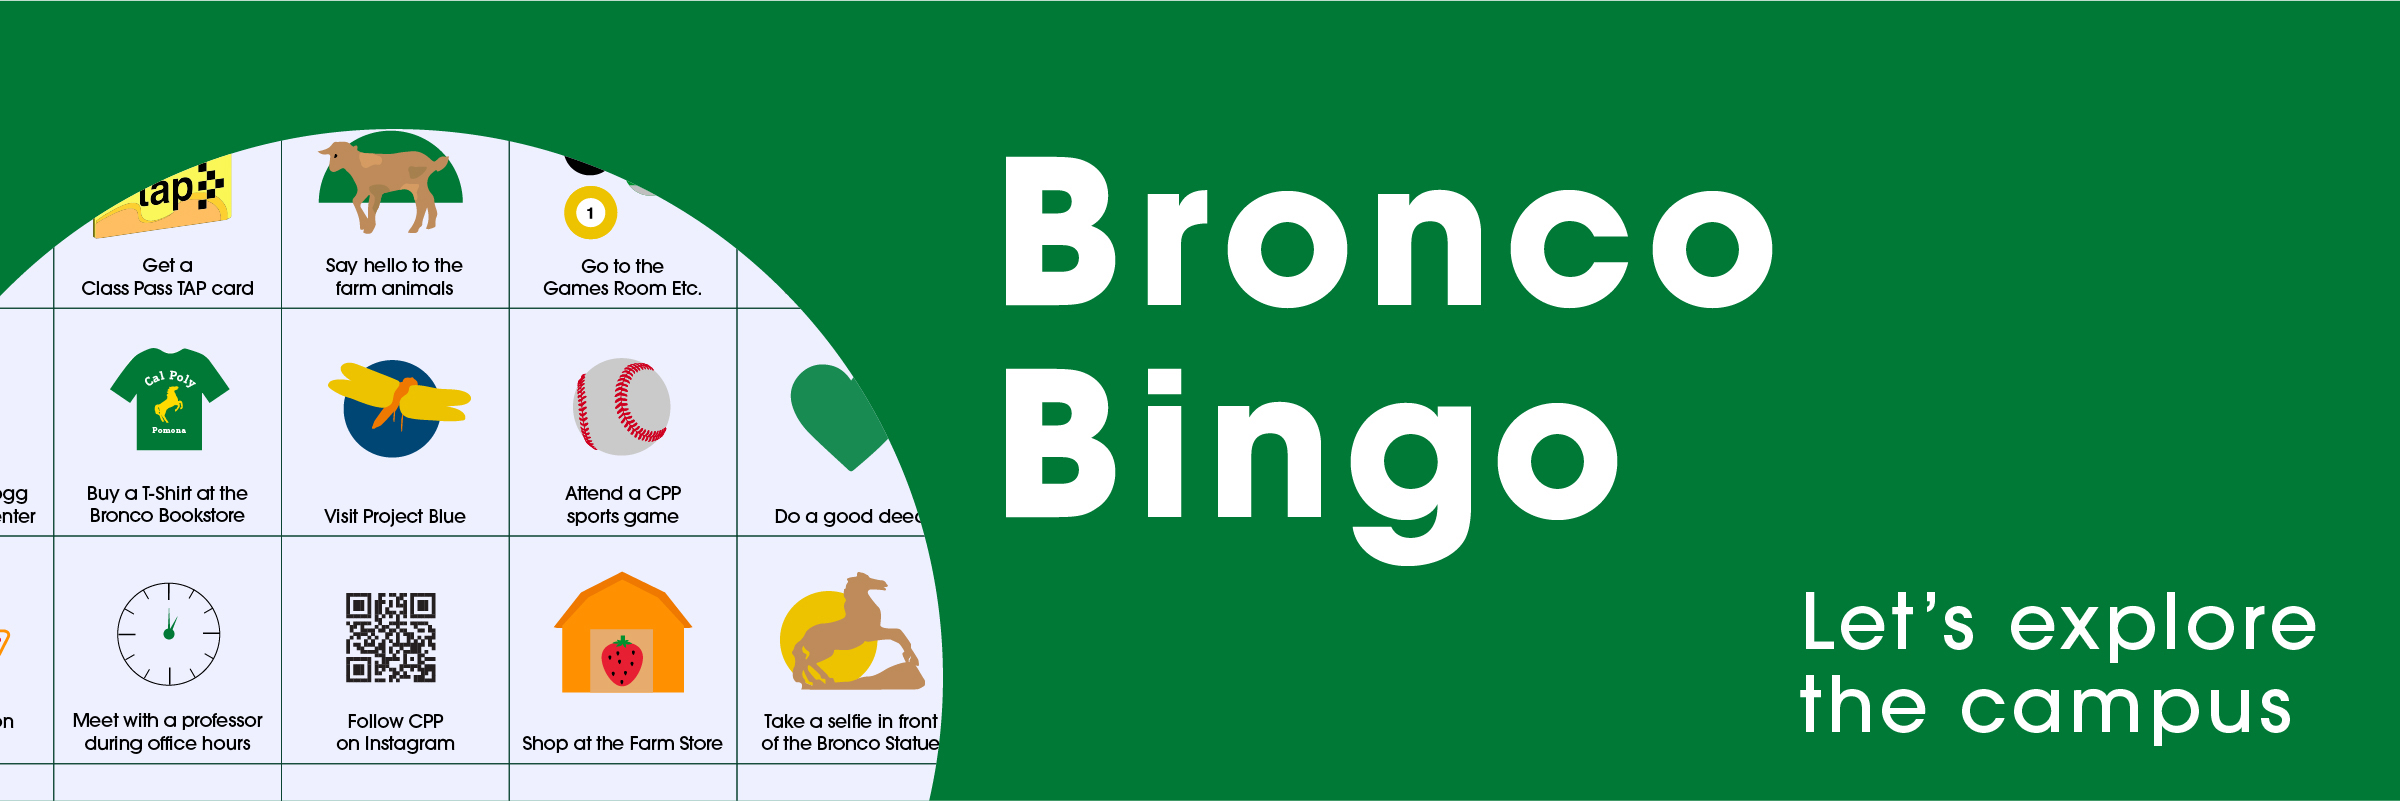 Bronco Bingo. Let's explore the campus